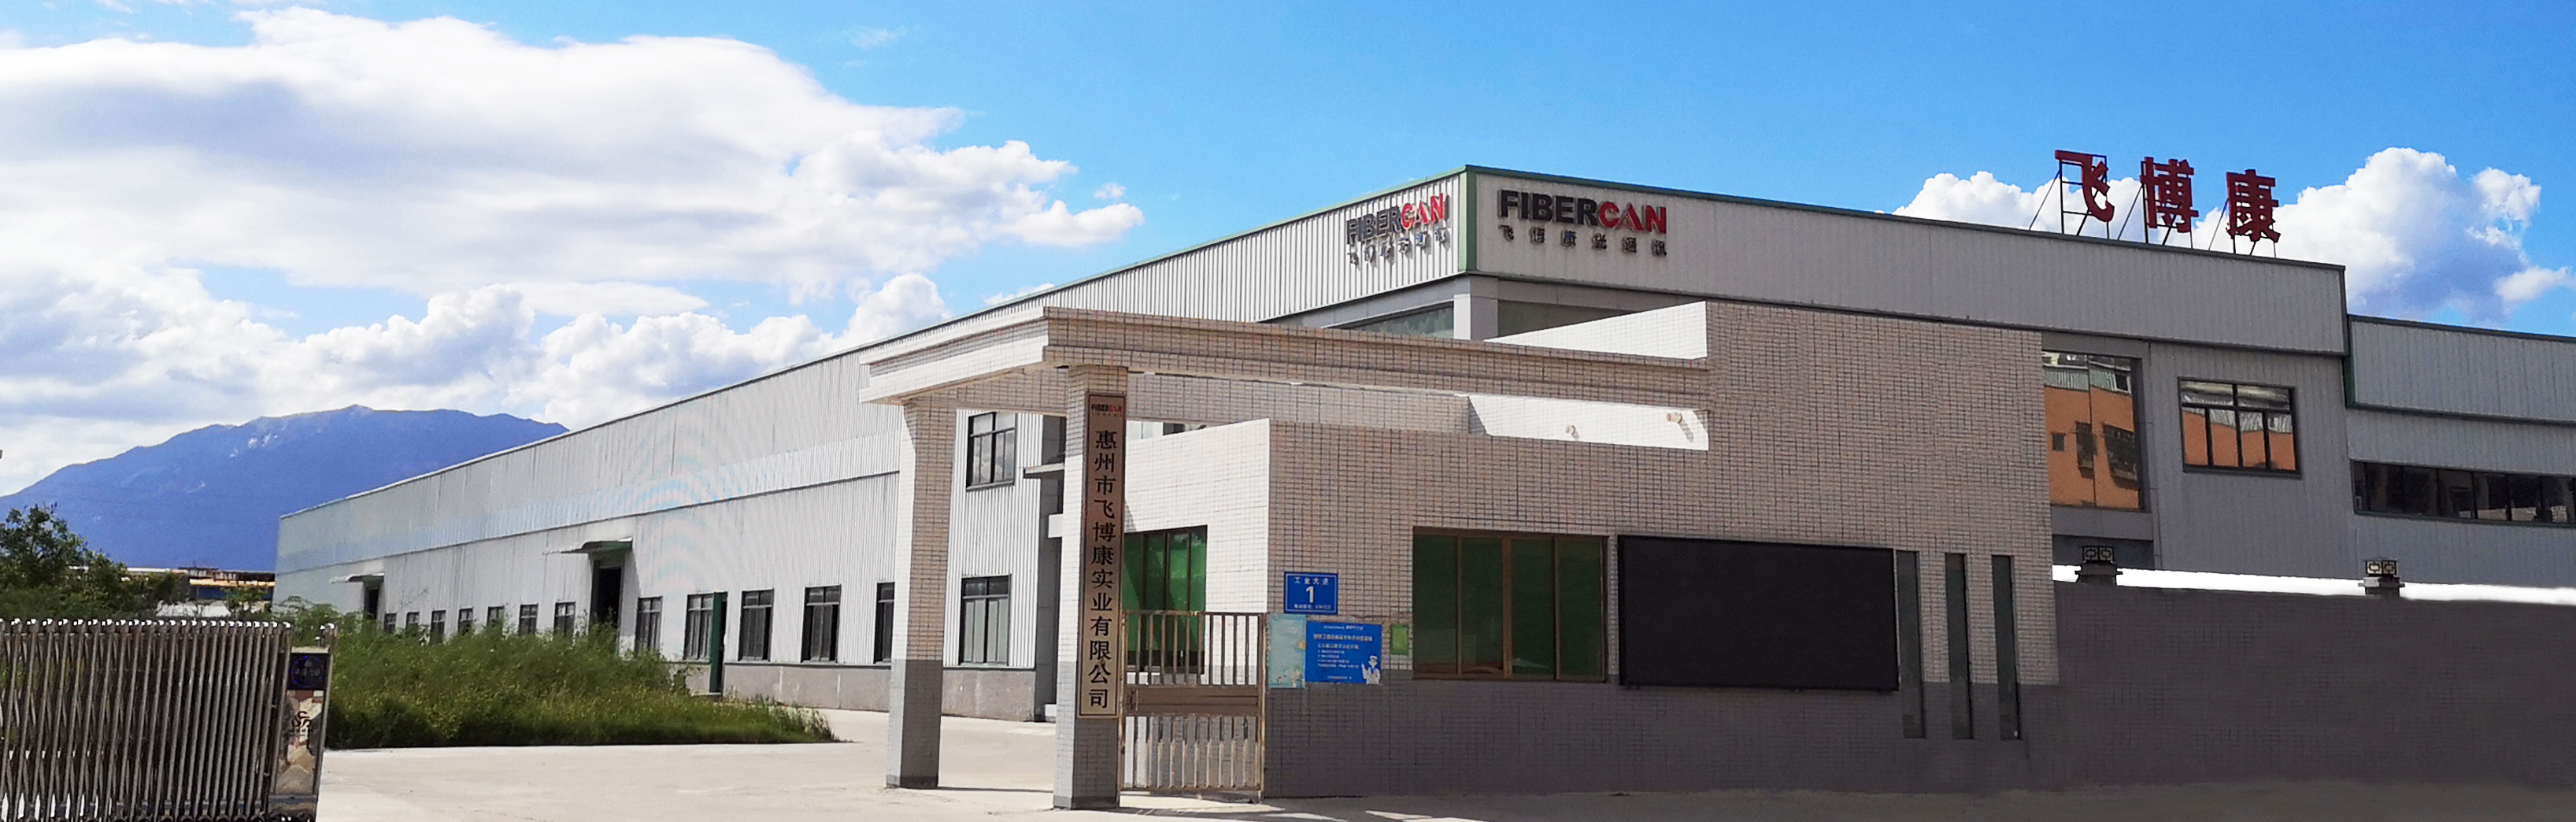 Fibercan Industrial Co., Ltd.